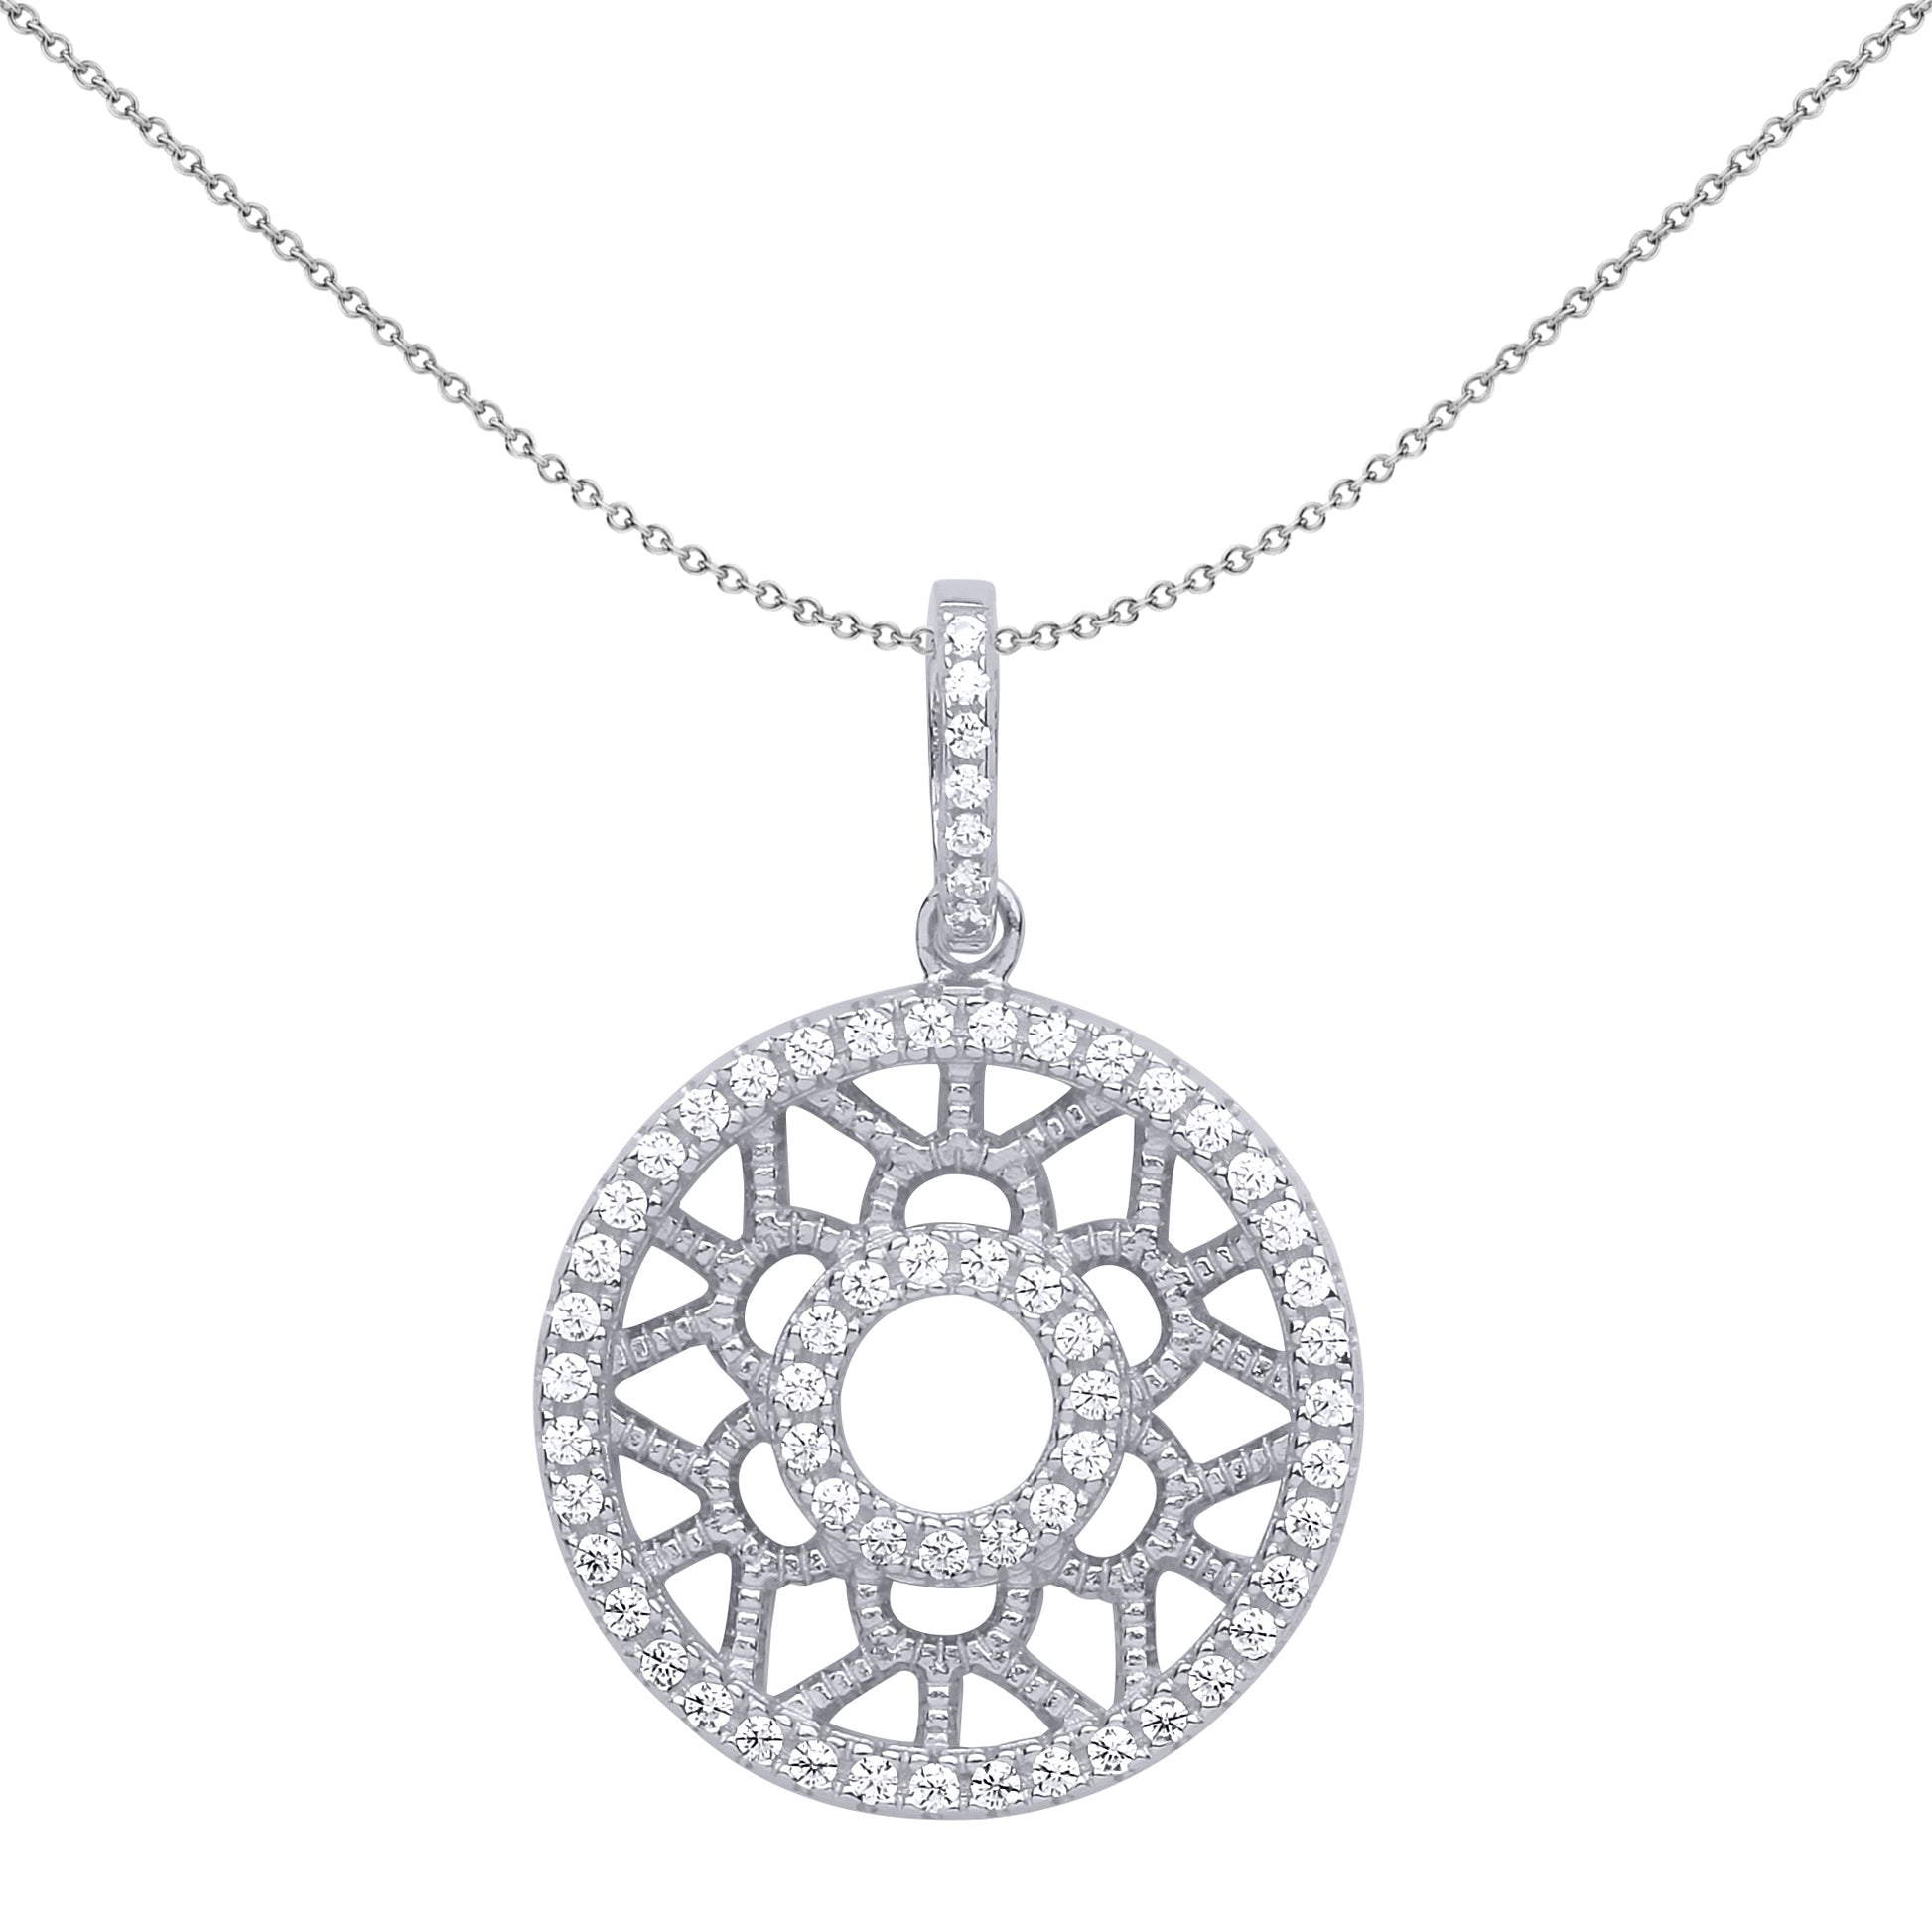 Silver  CZ Daisy Halo Mosaic Pendant Necklace 18 inch - GVP518